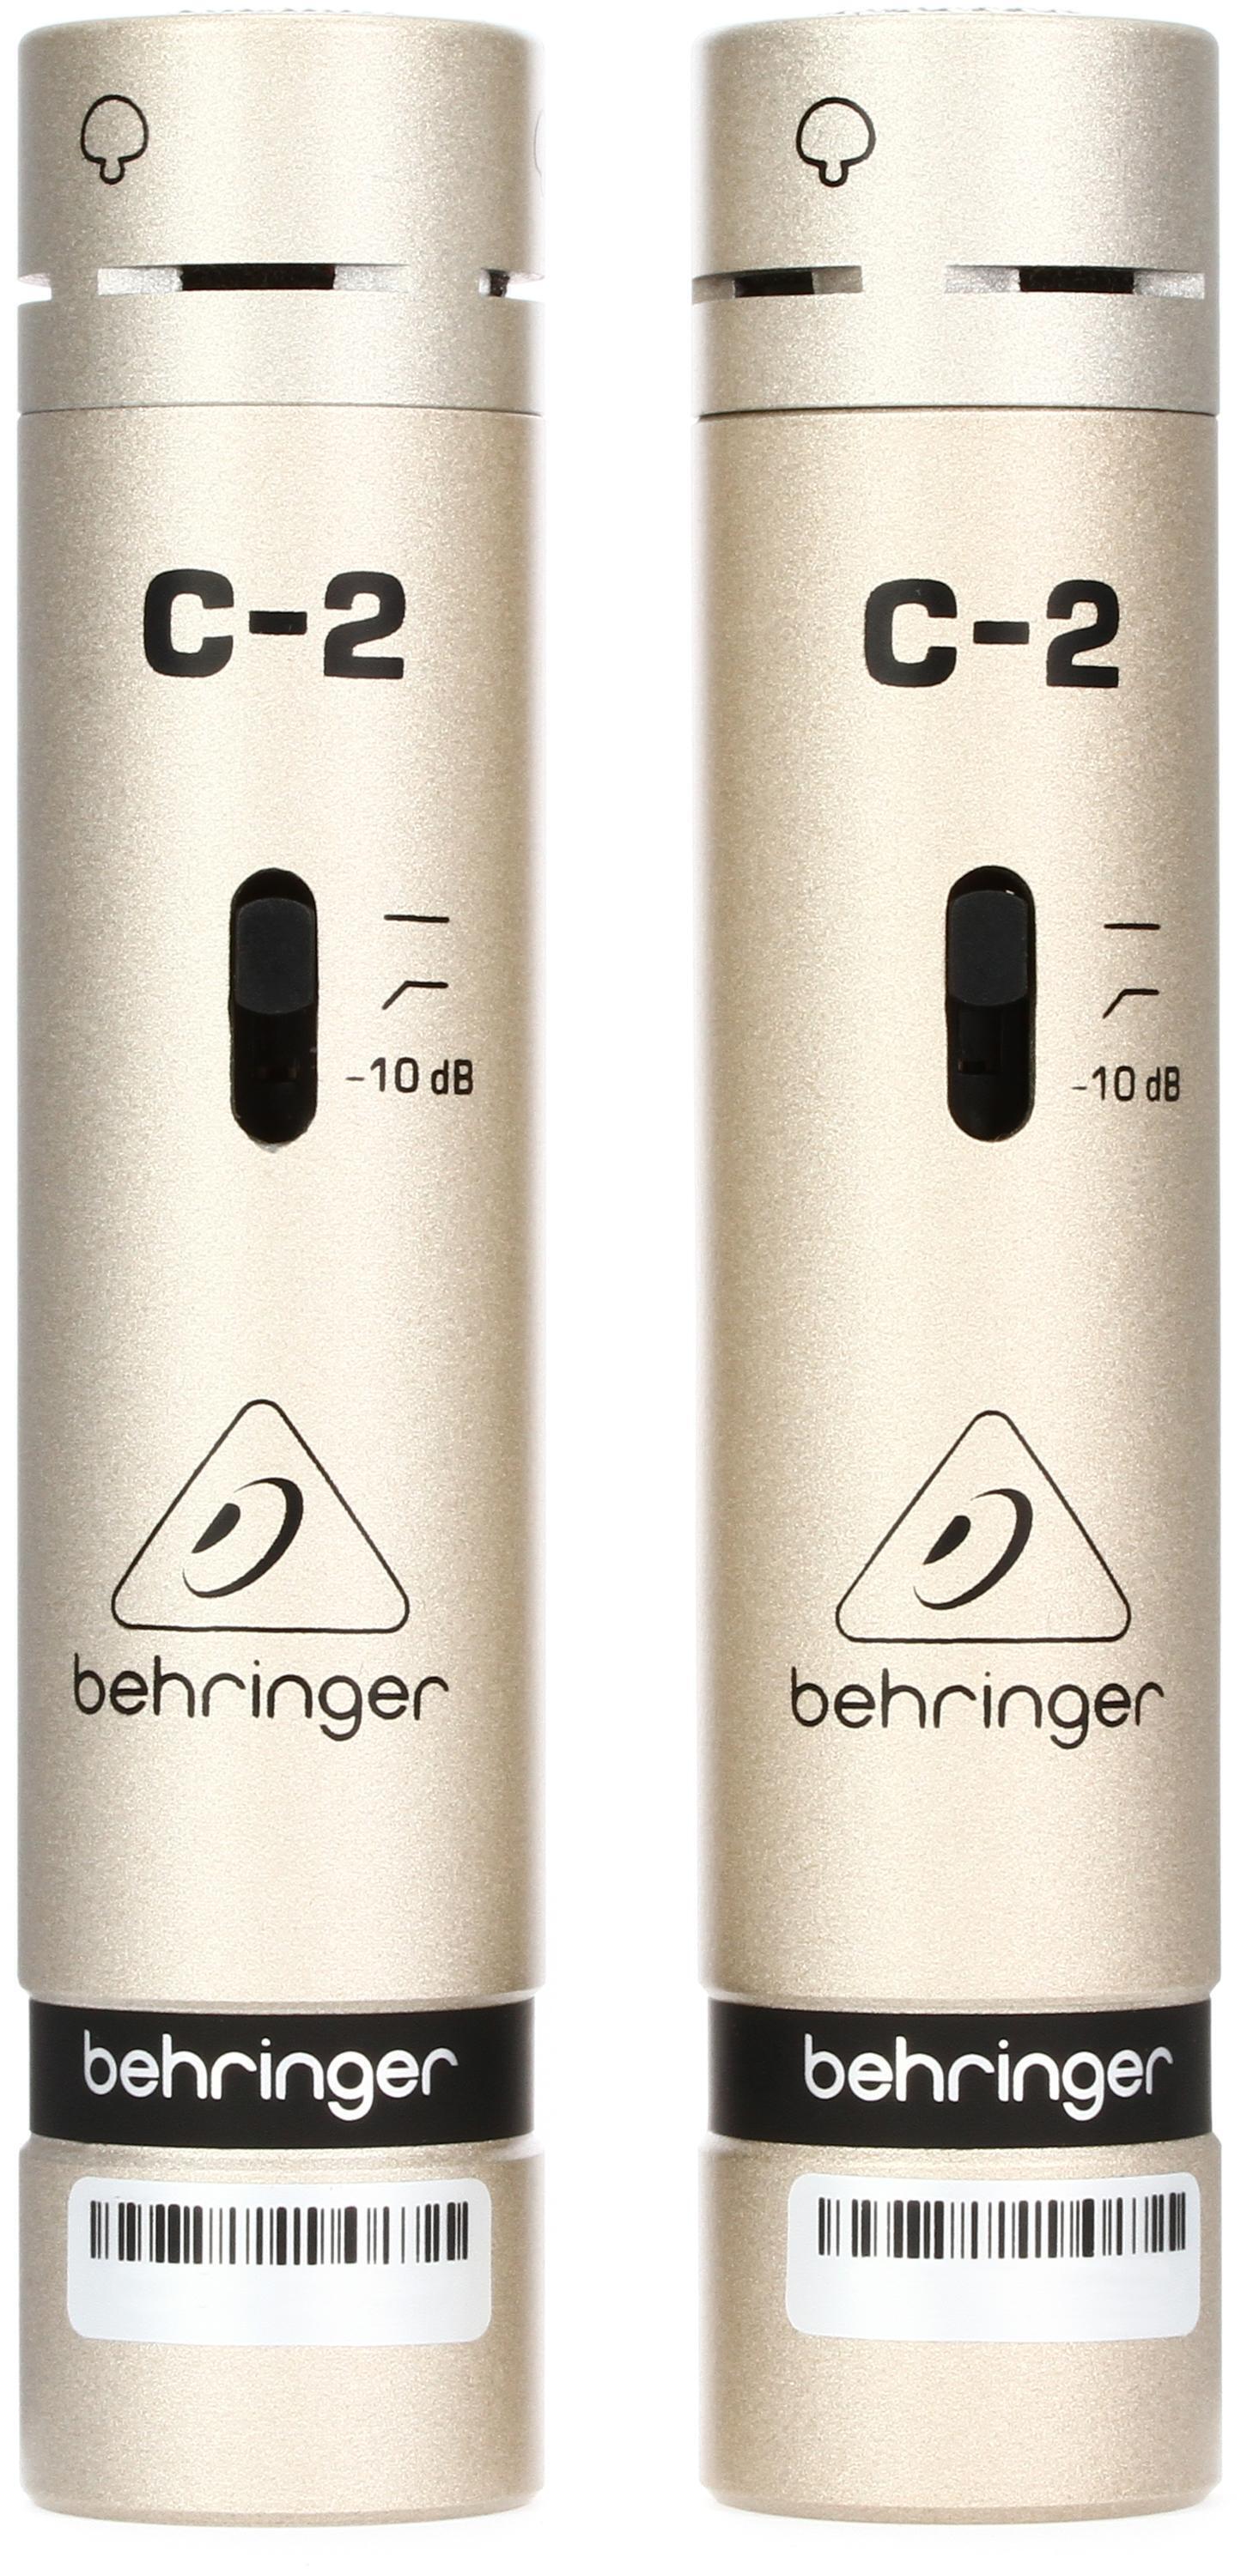 Bundled Item: Behringer C-2 Matched Studio Condenser Microphones (pair)